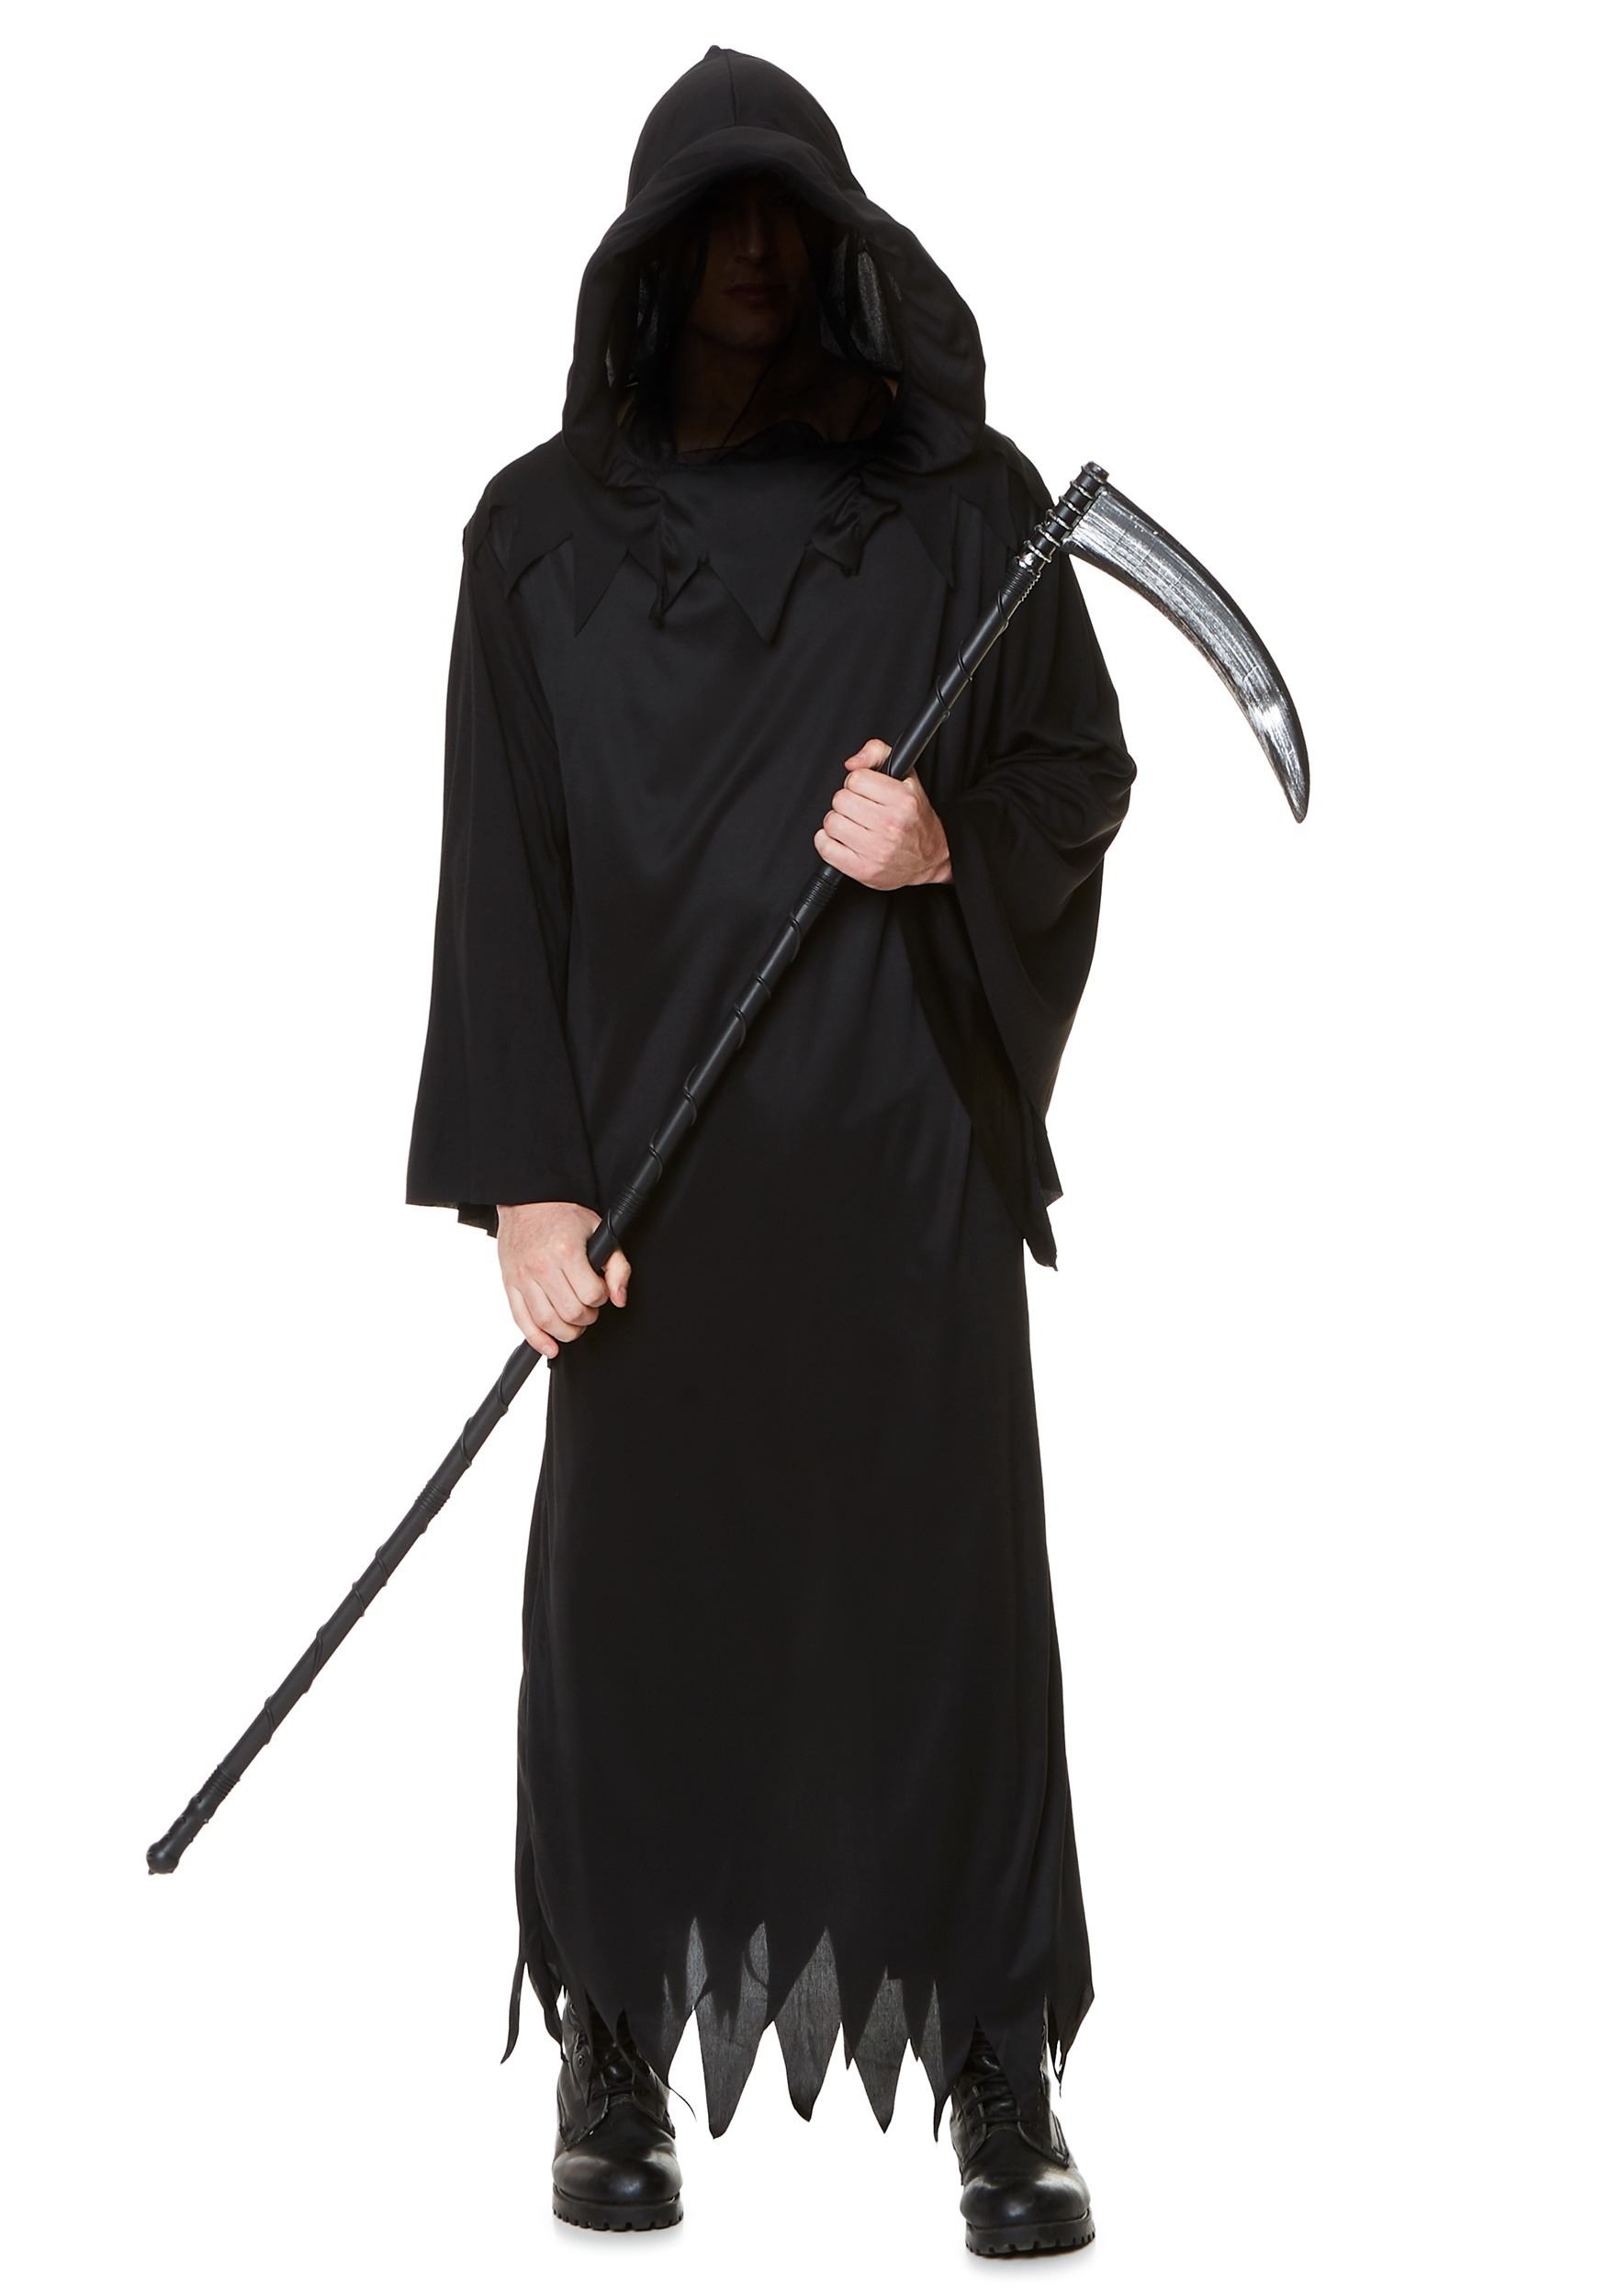 Fantasia de Reaper Masculino com Músculos - Men's Reaper Costume